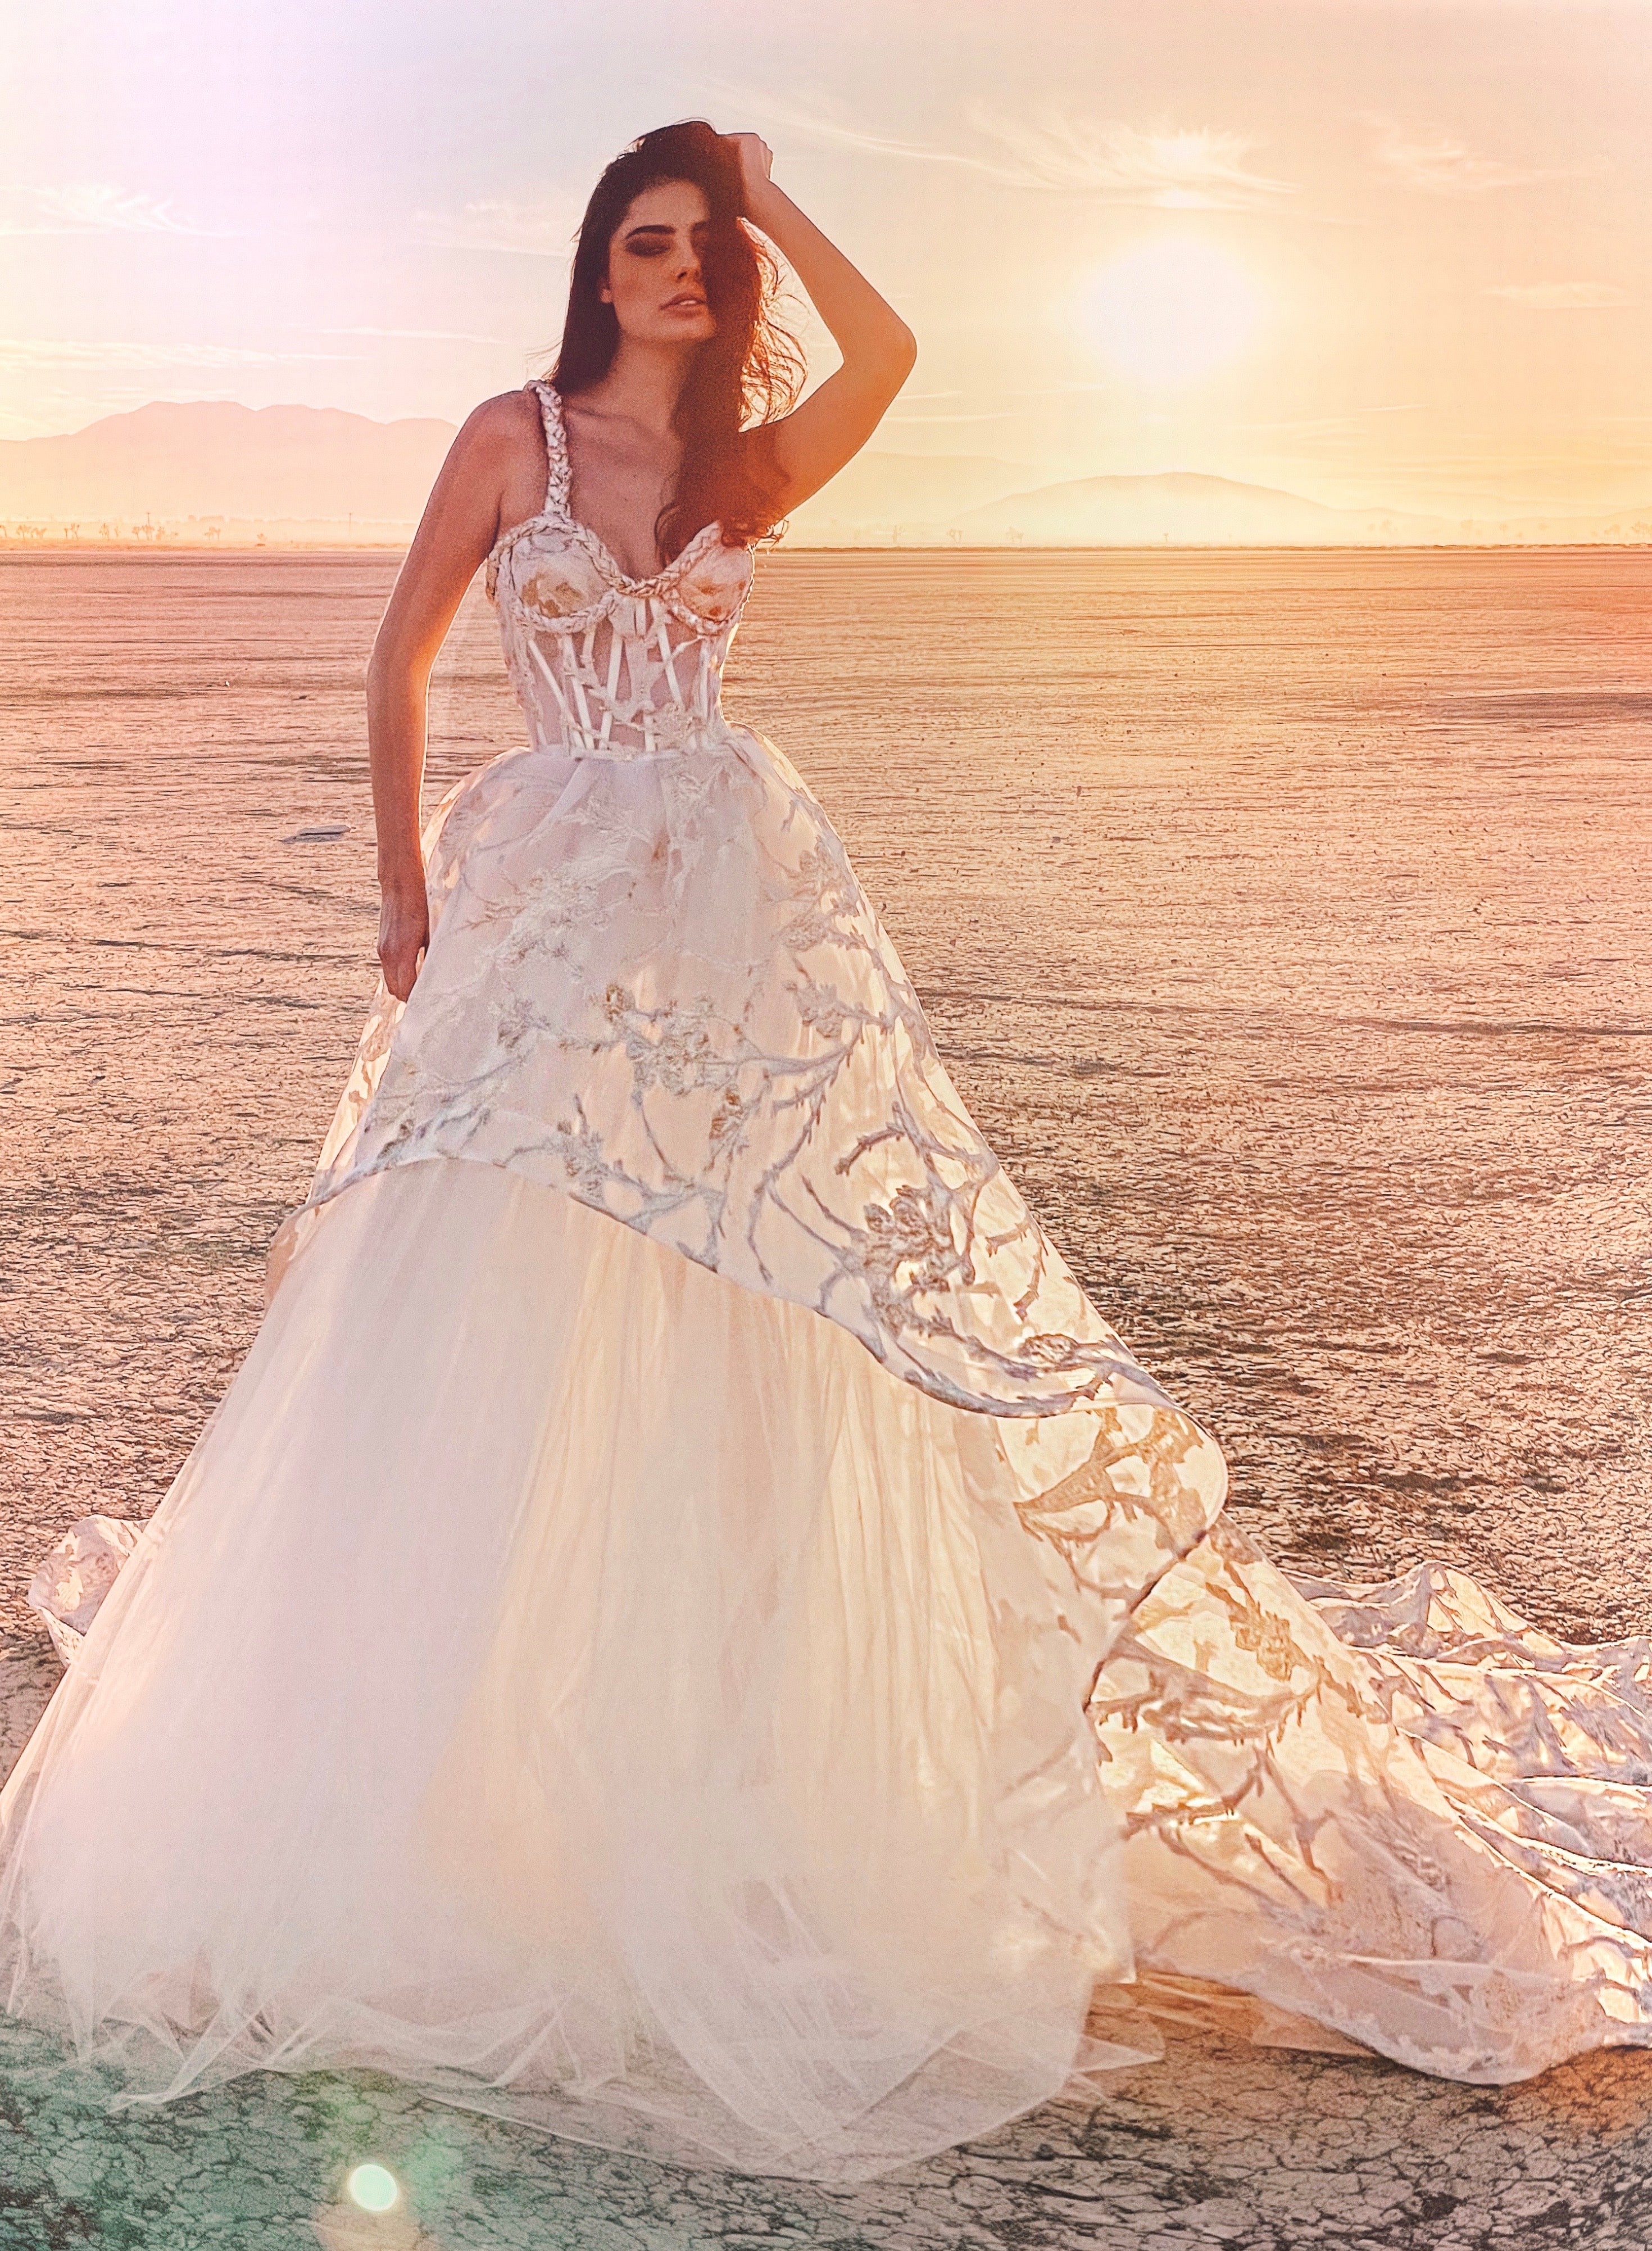 Organza ball gown wedding dress with sunset in desert